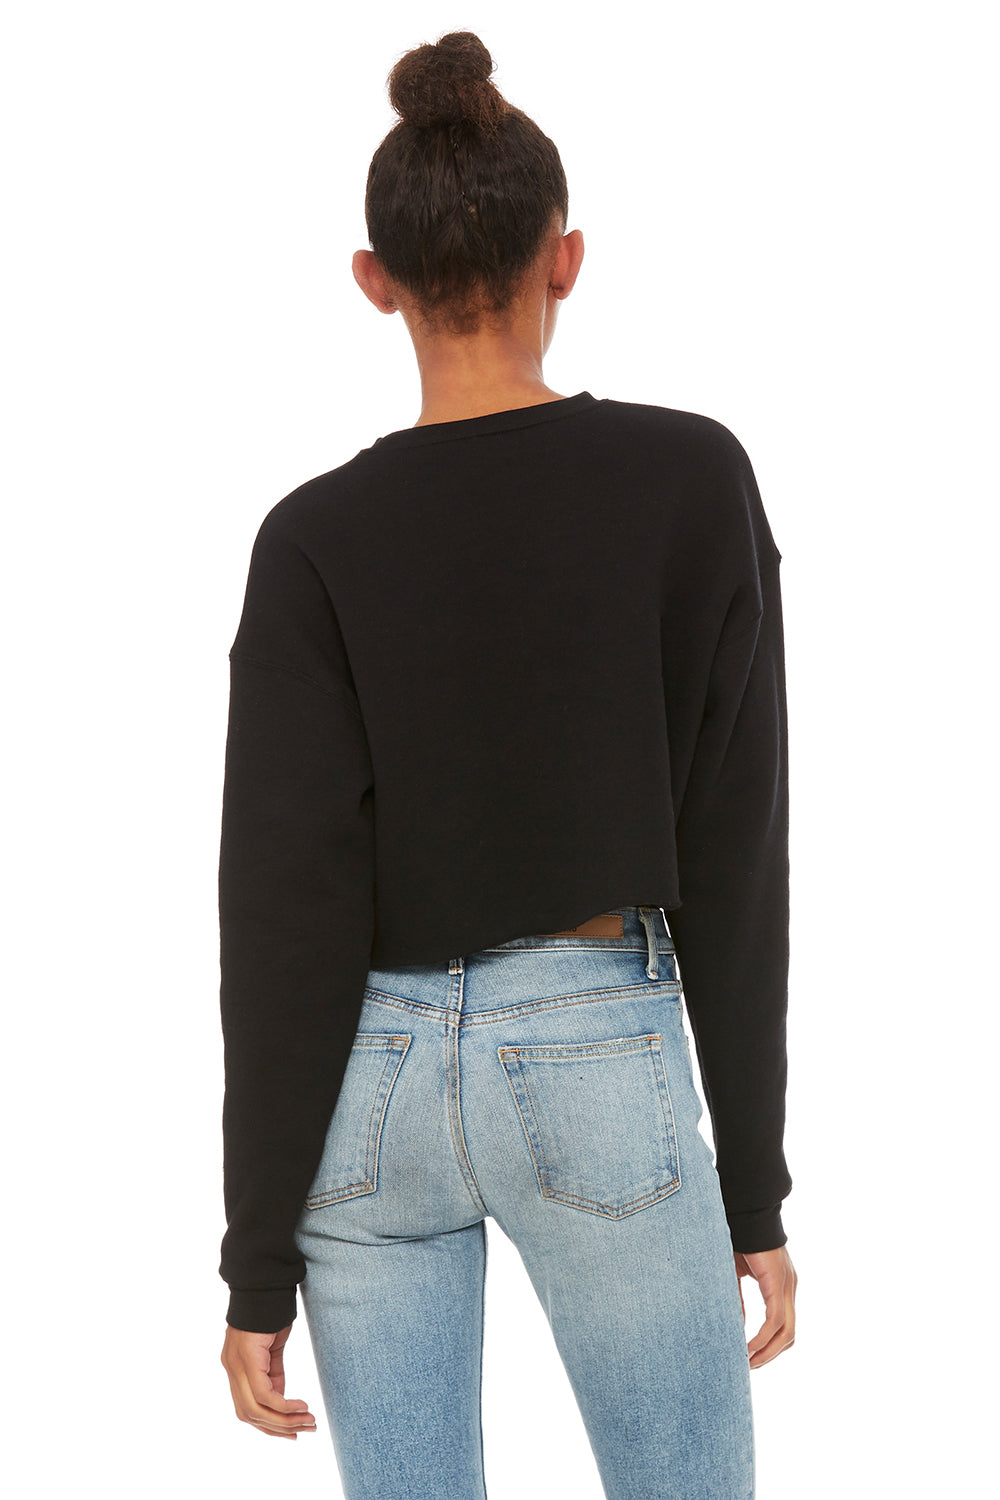 Bella + Canvas B7503/7503 Womens Cropped Fleece Crewneck Sweatshirt Black Model Back